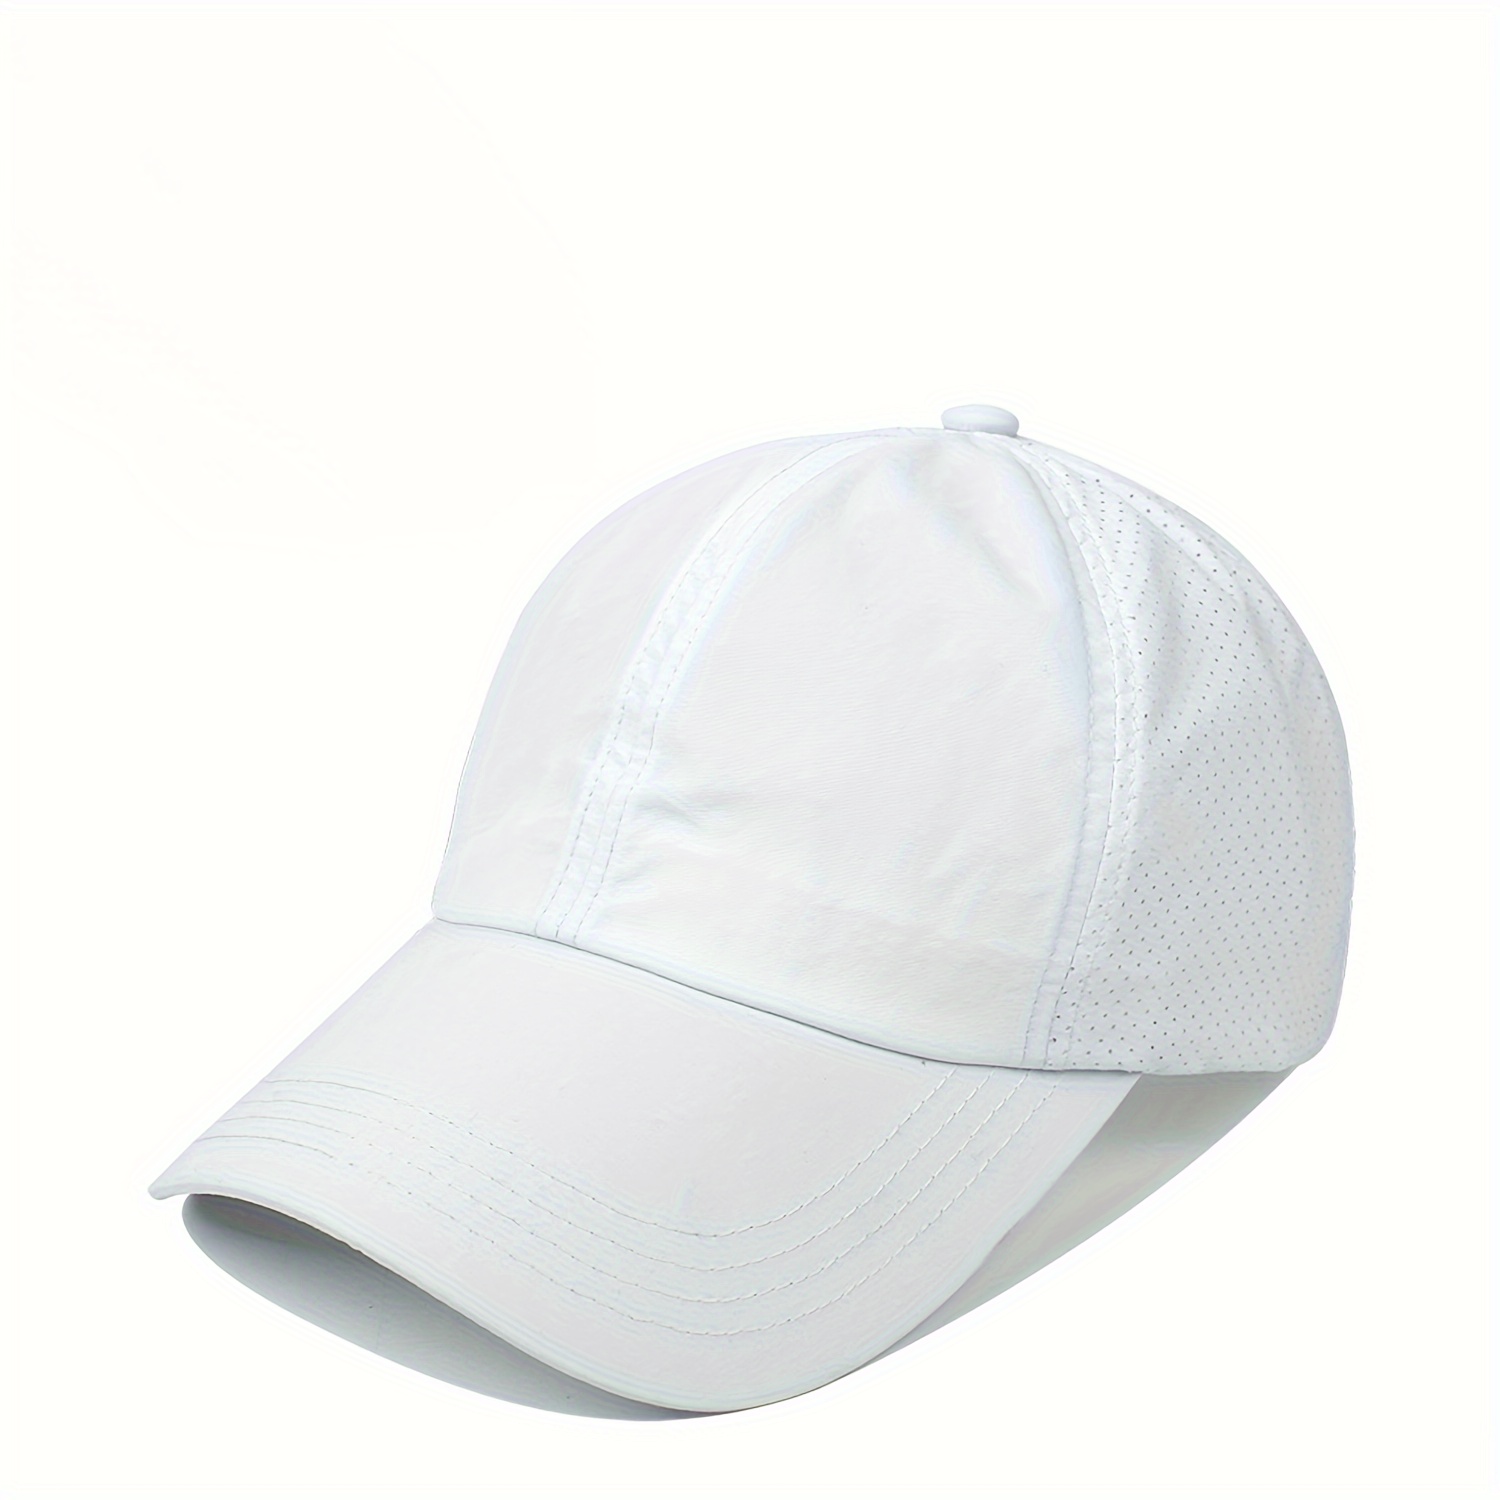 Outdoor Sports Ponytail Baseball Cap Breathable Mesh Cap White